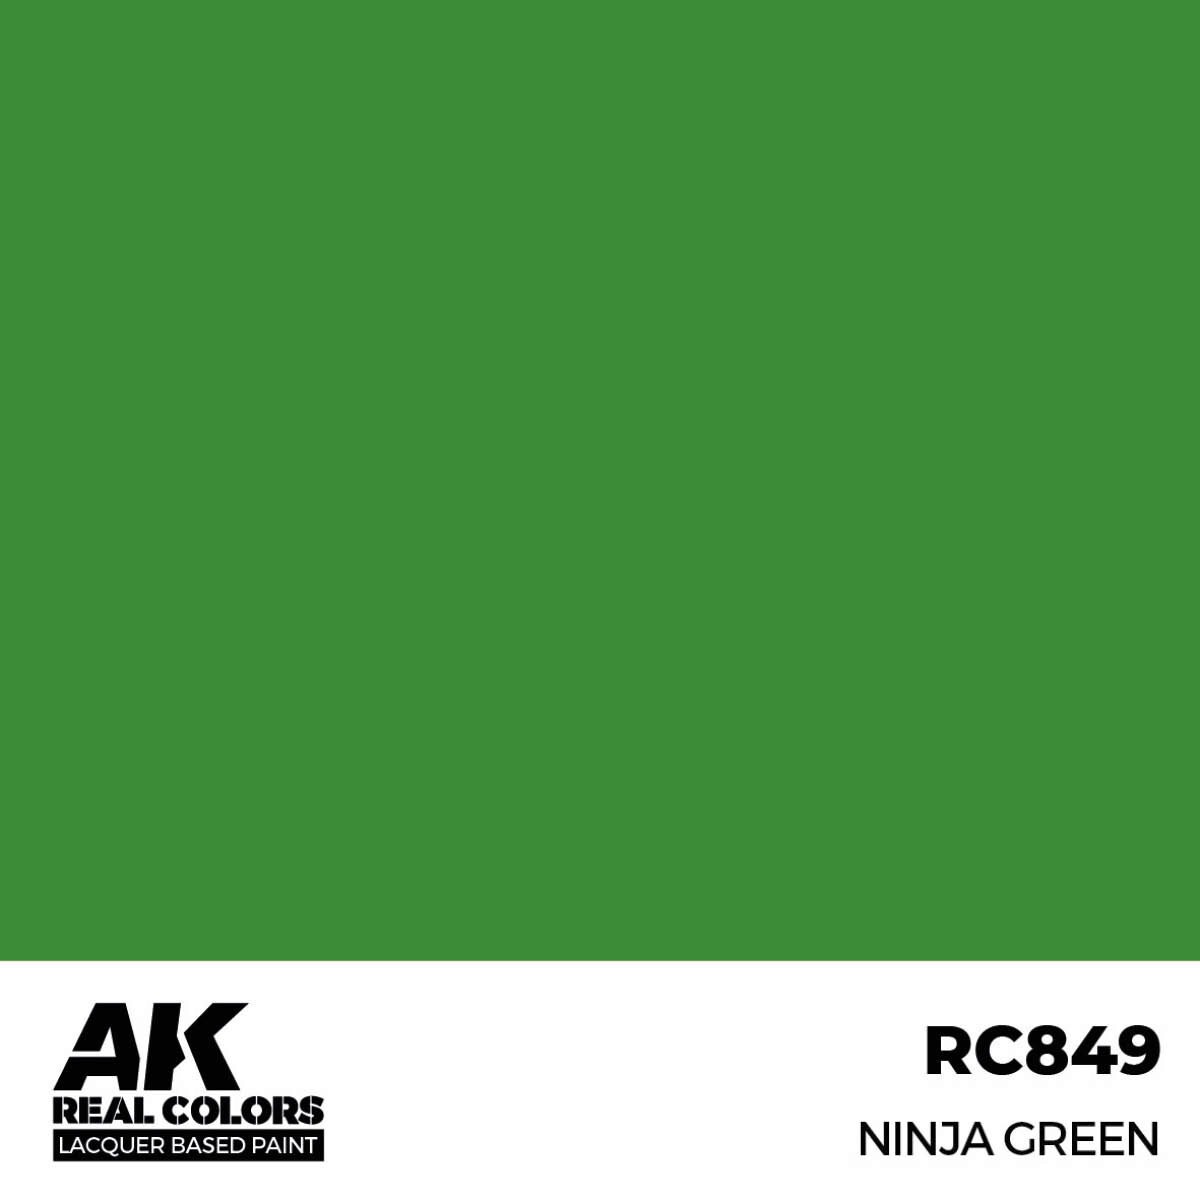 AK RC849 Real Colors Ninja Green 17 ml.